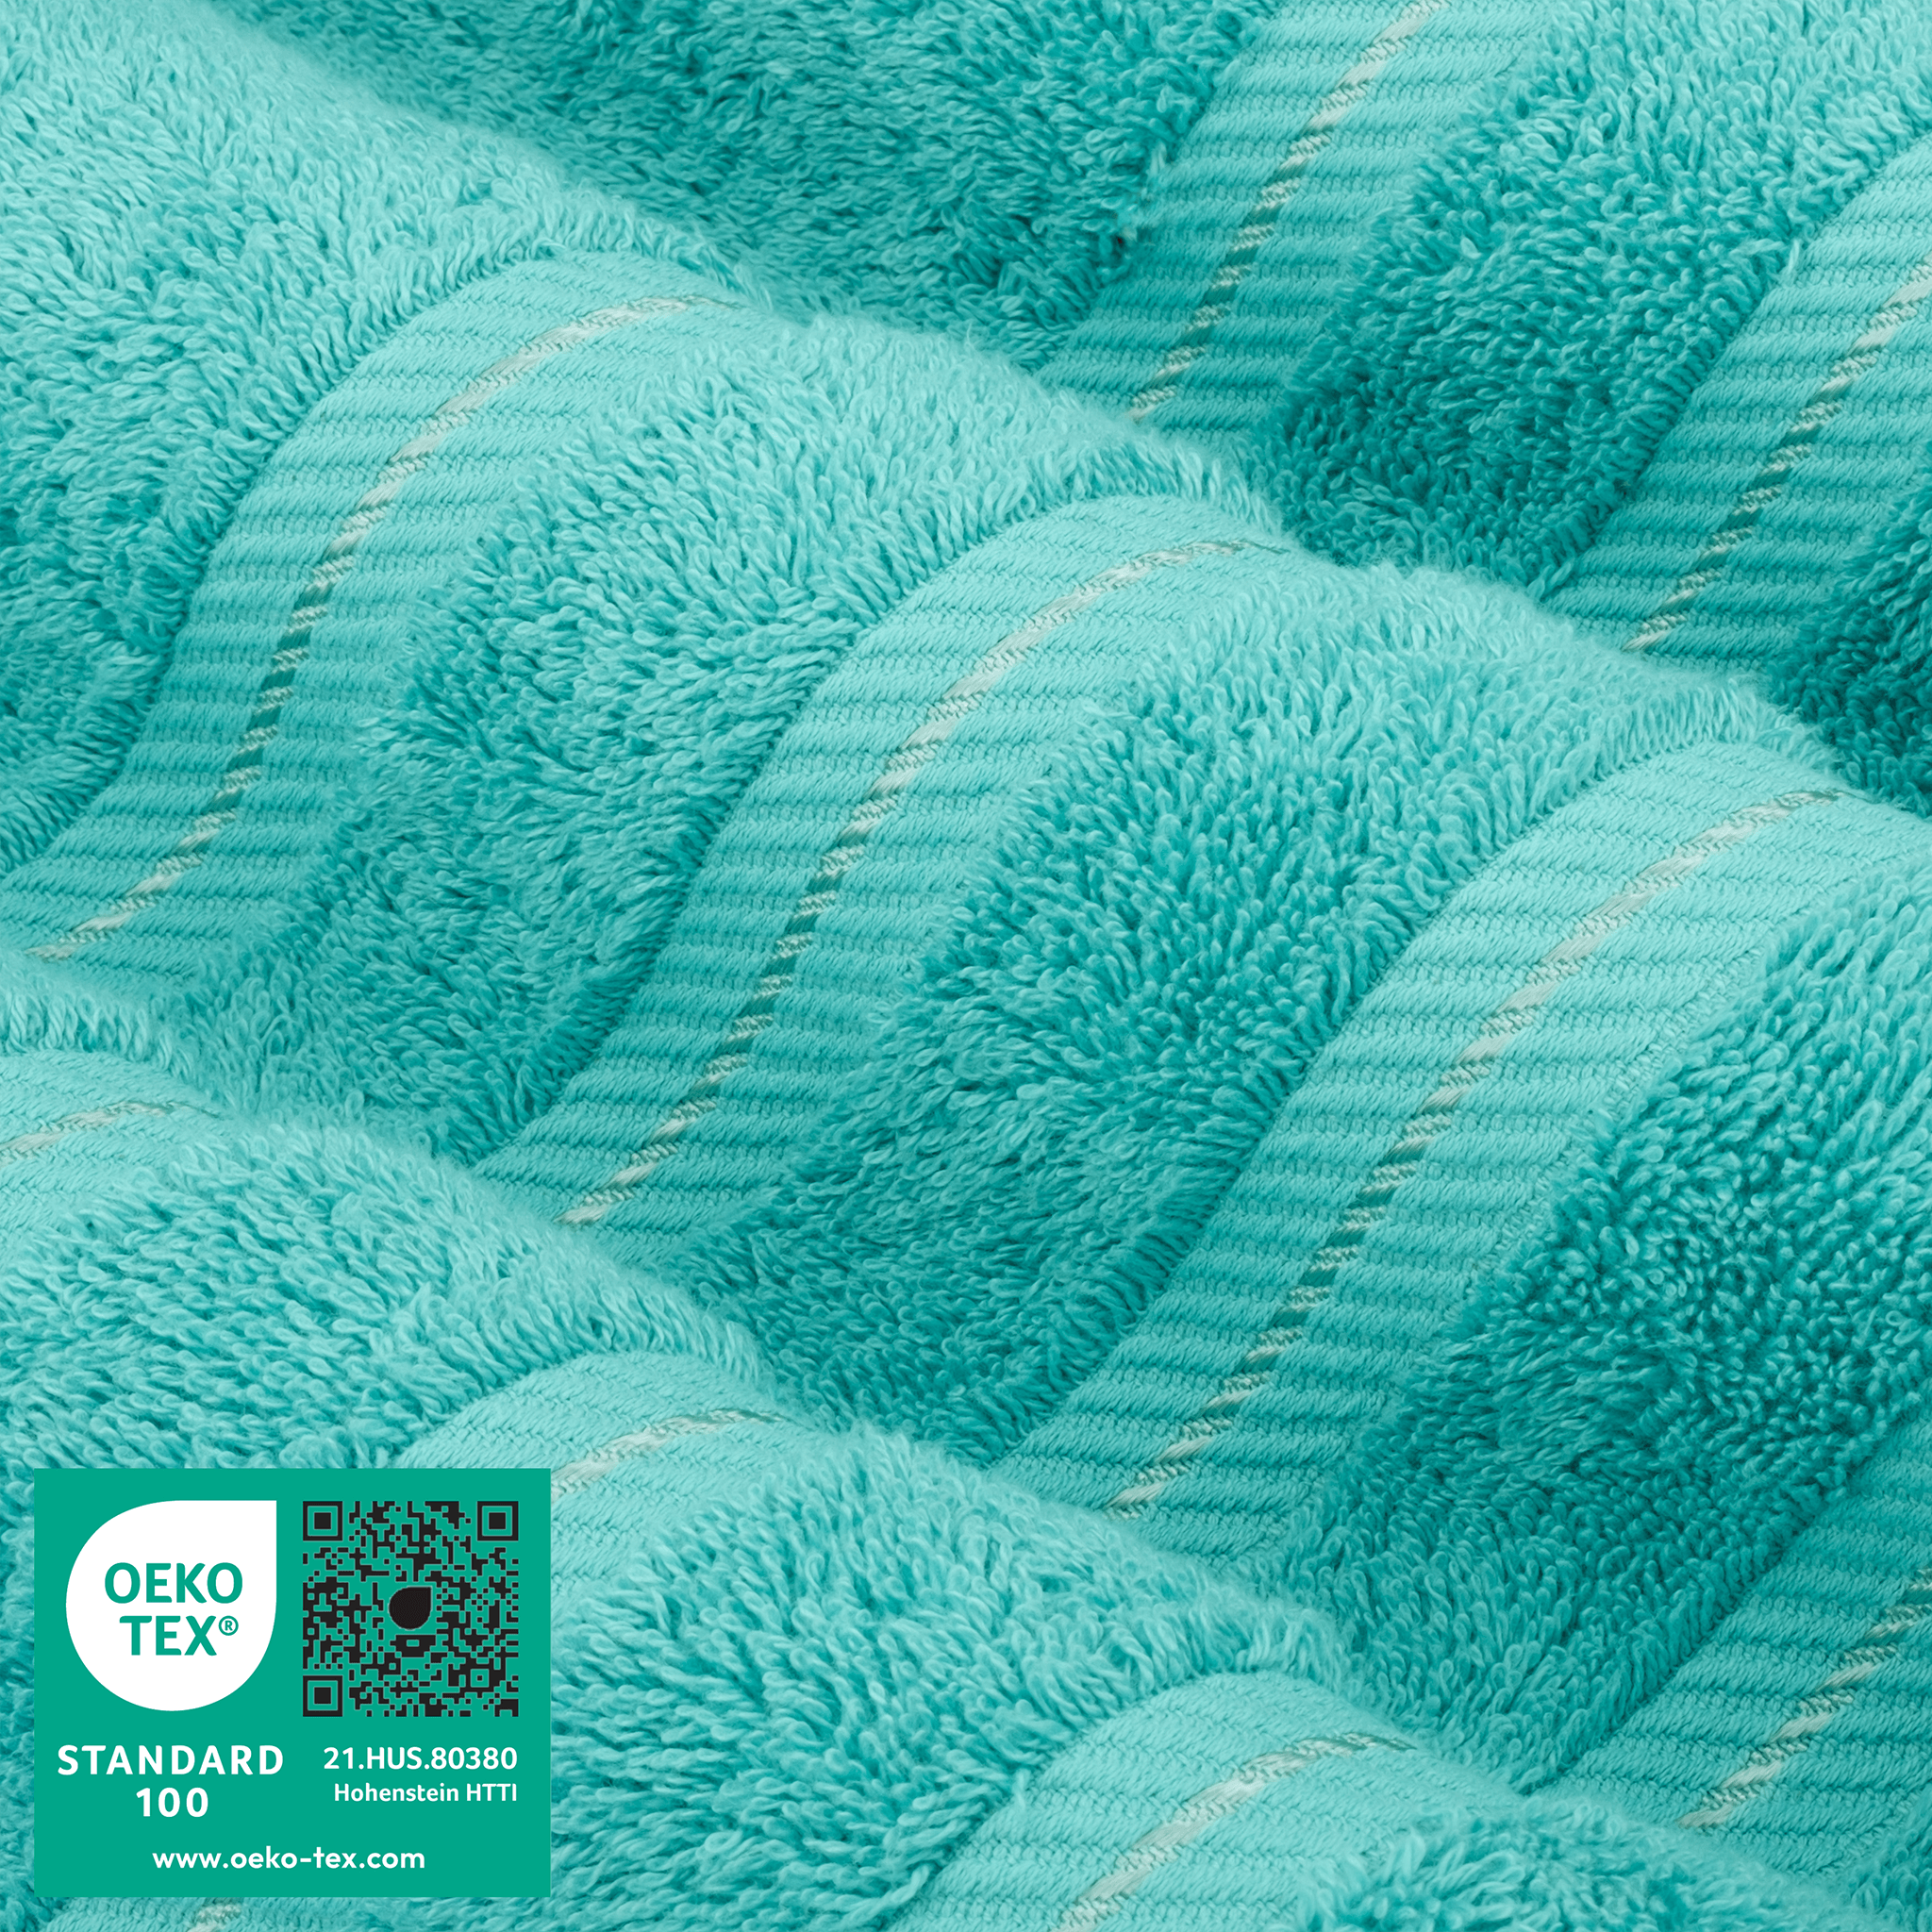 American Soft Linen - 3 Piece Turkish Cotton Towel Set - Turquoise-Blue - 3